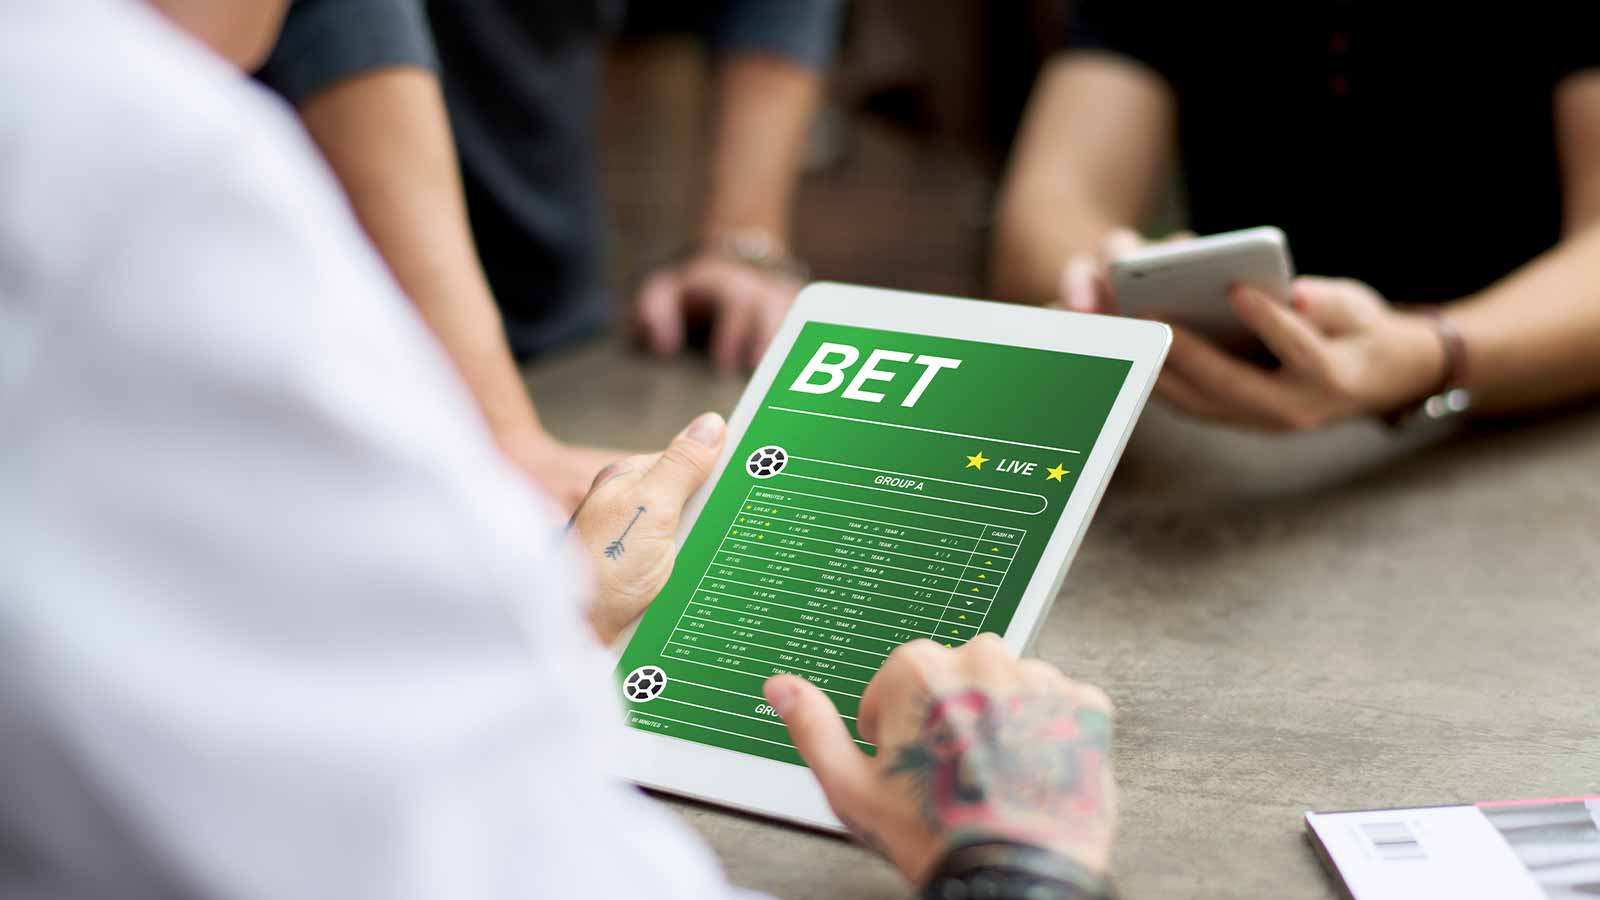 Sports betting in casinos